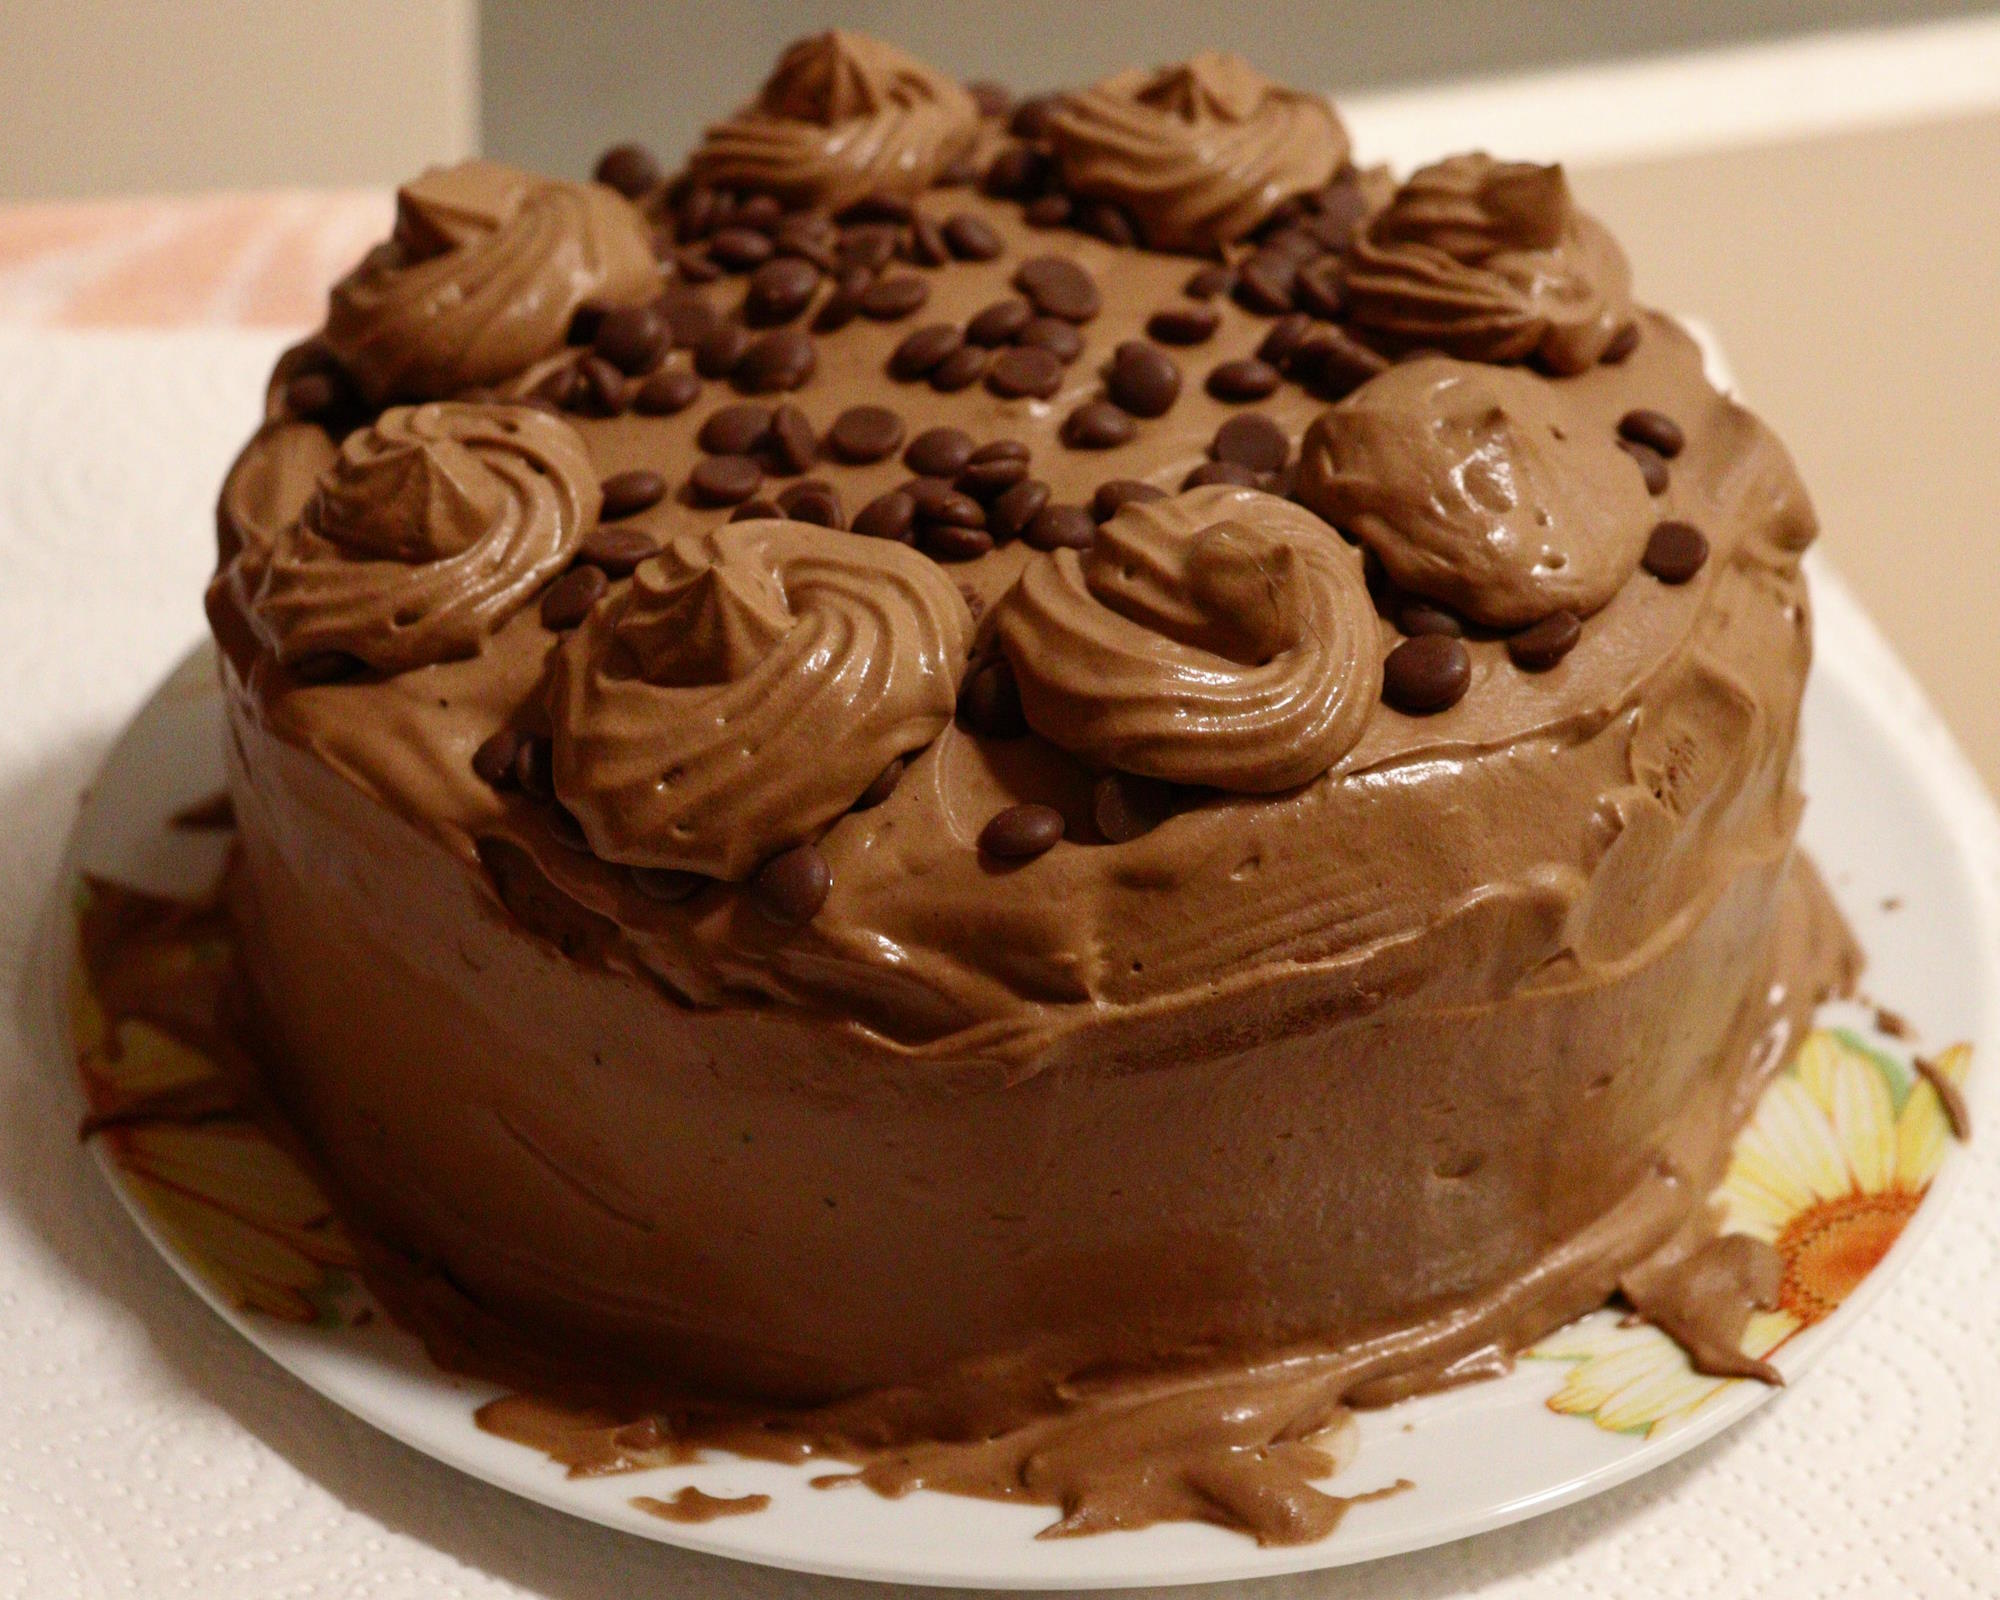 A chocolate cream cake sitting on a plate